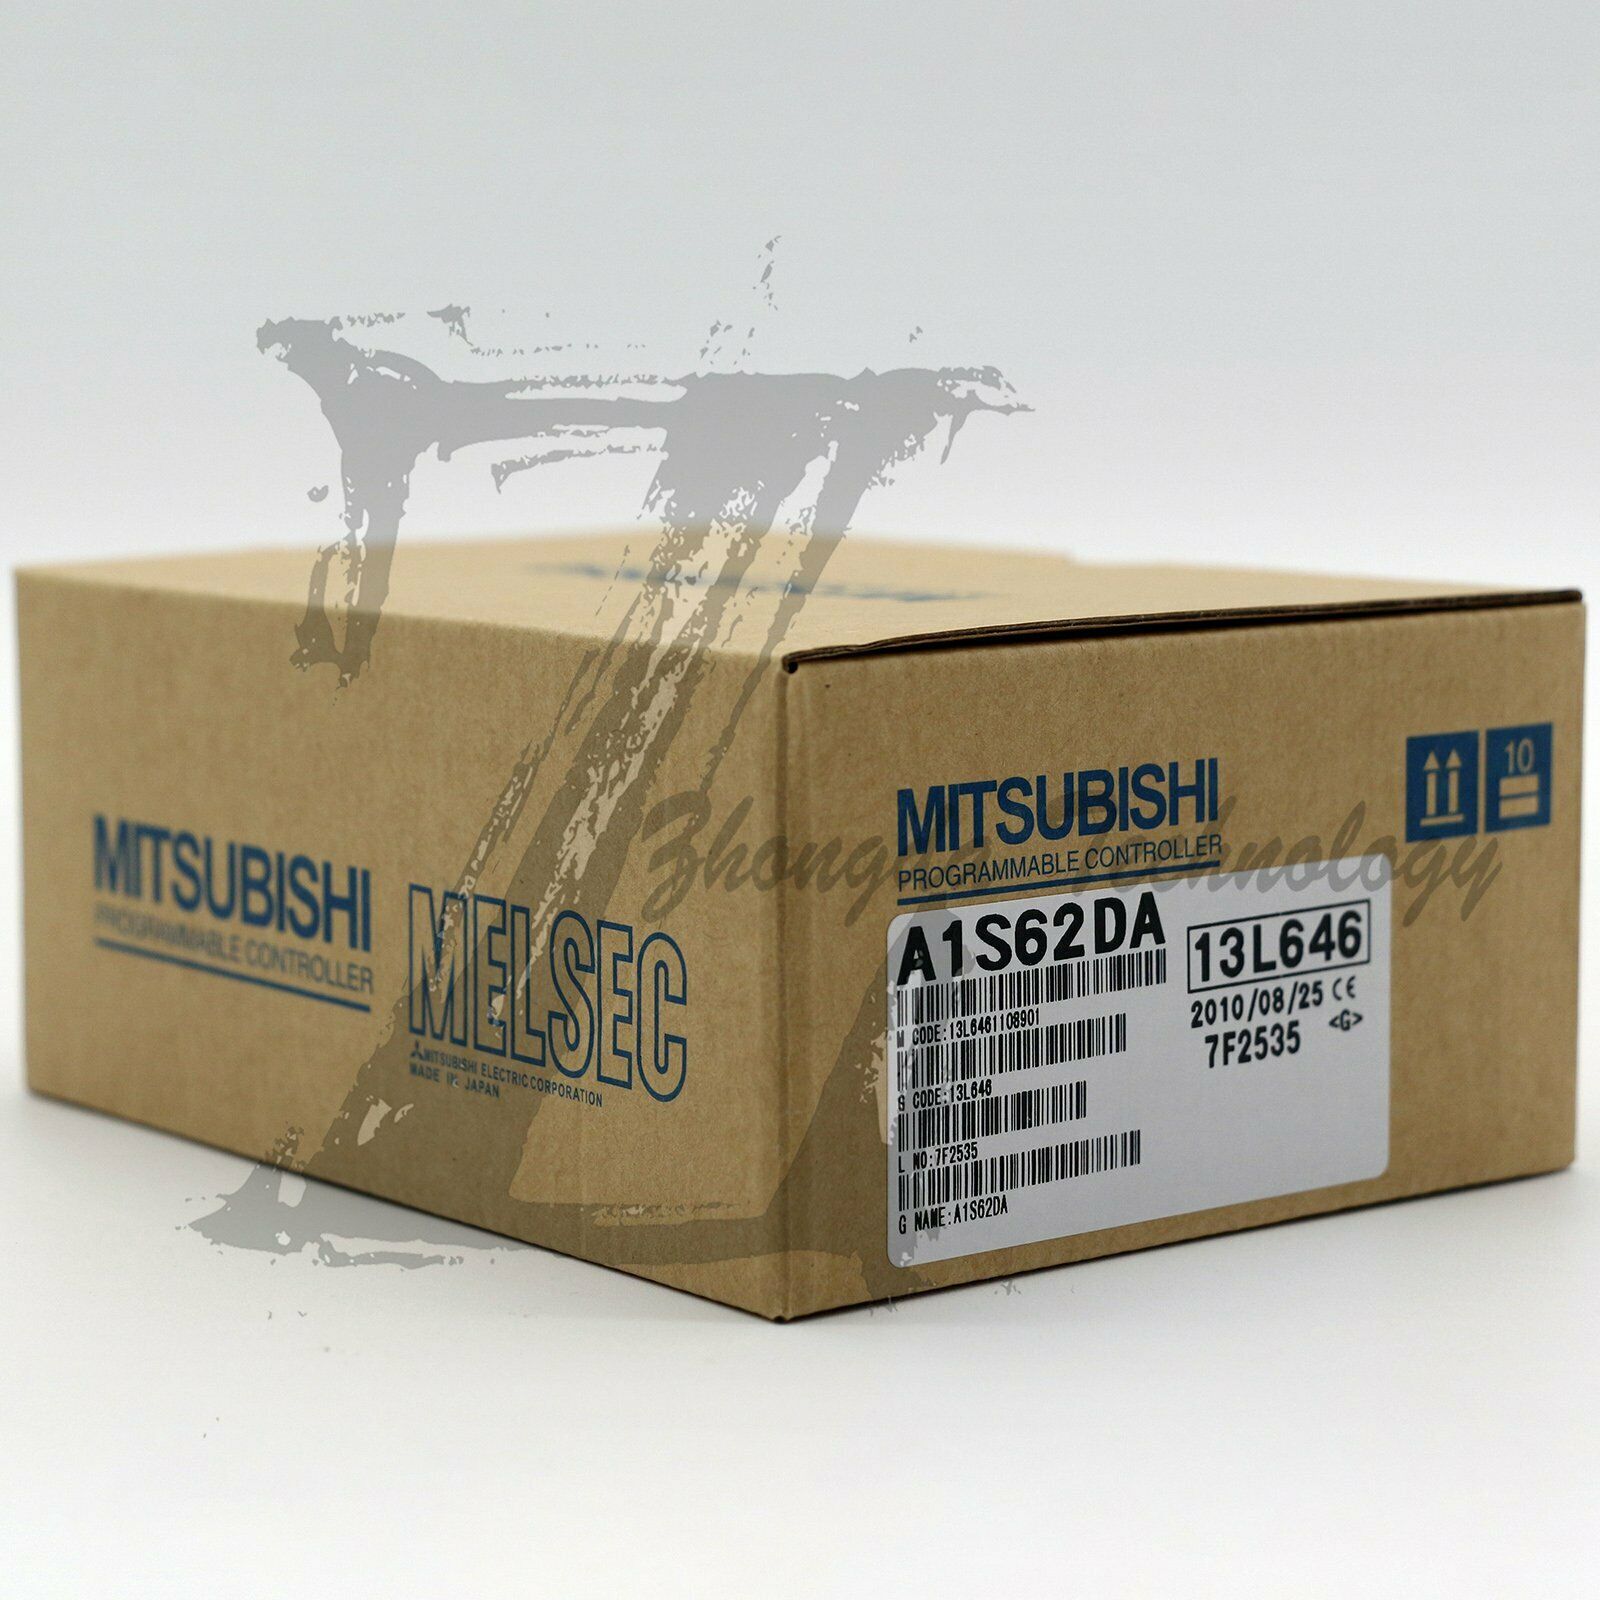 NEW Mitsubishi Converter Unit A1S62DA